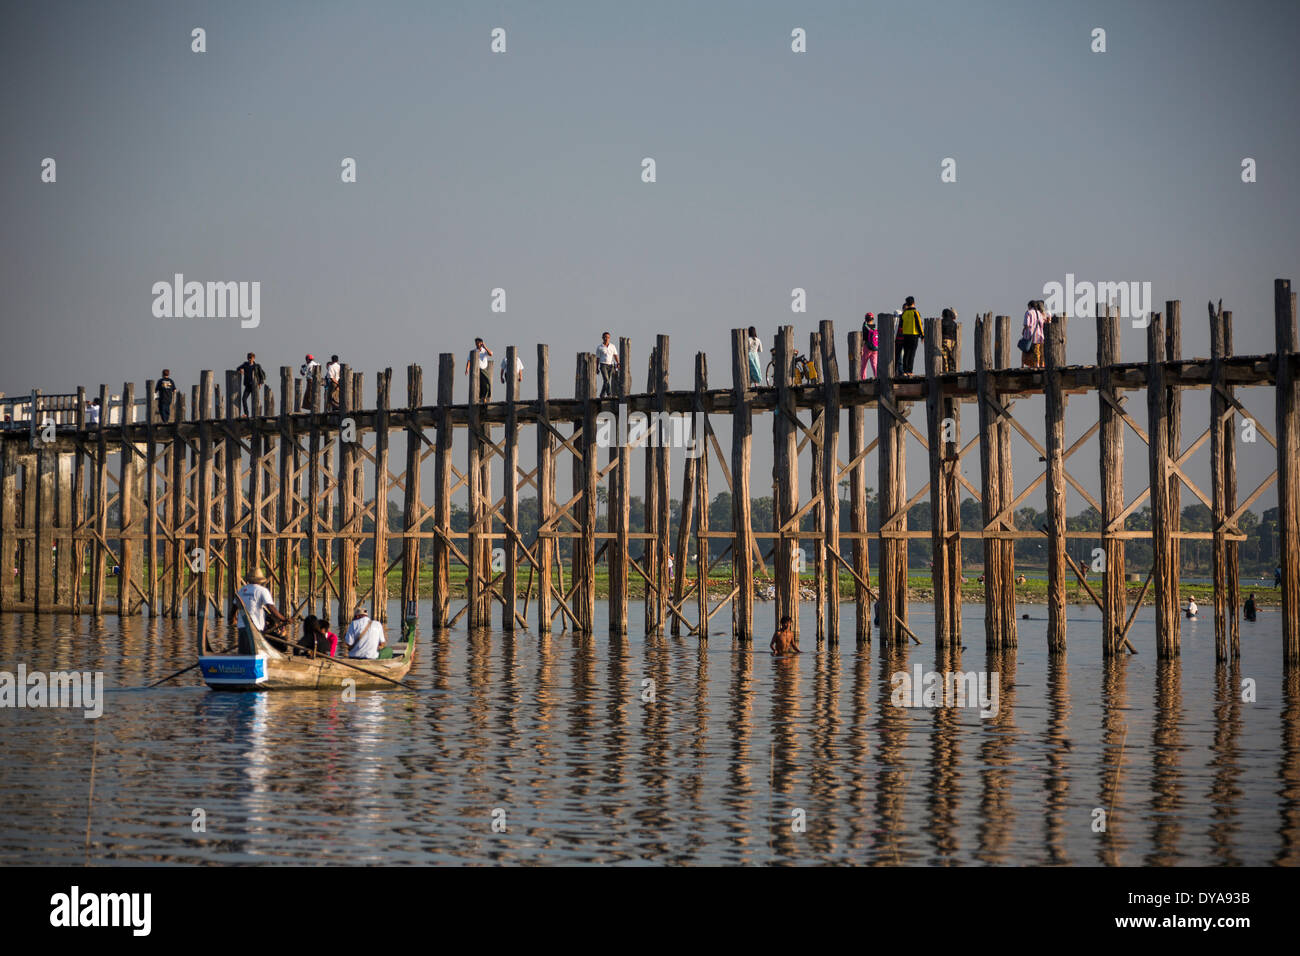 Amarapura Mandalay Myanmar Burma Asien Thaungthaman Boot Brücke berühmten See lange beliebte Reflexion Teka Sonnenuntergang touristische t Stockfoto